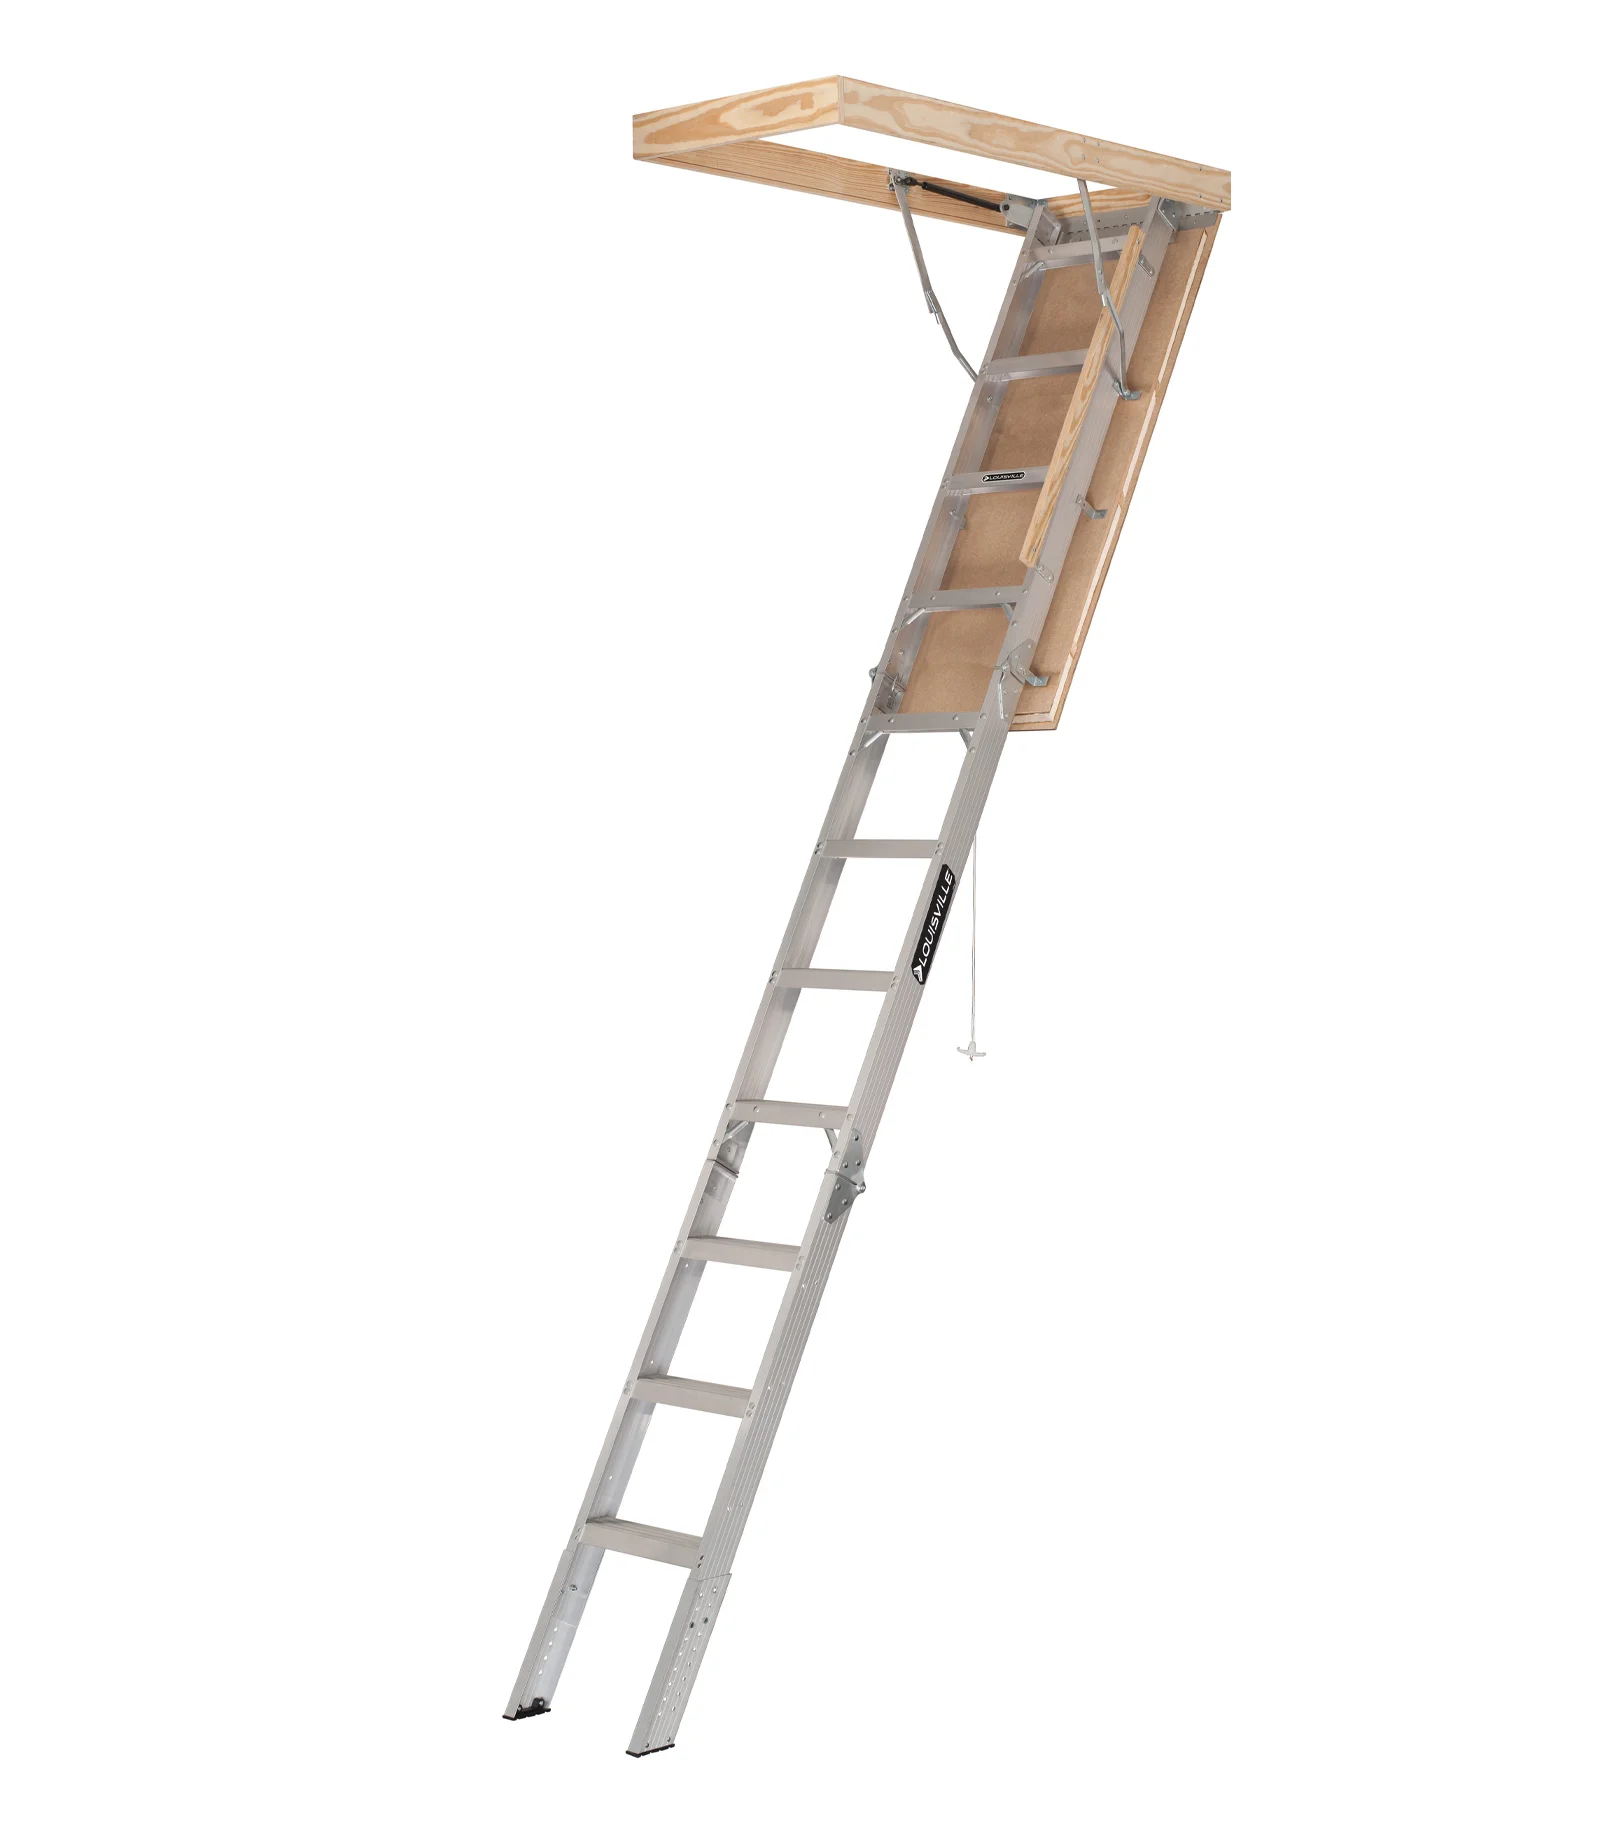 An attic ladder